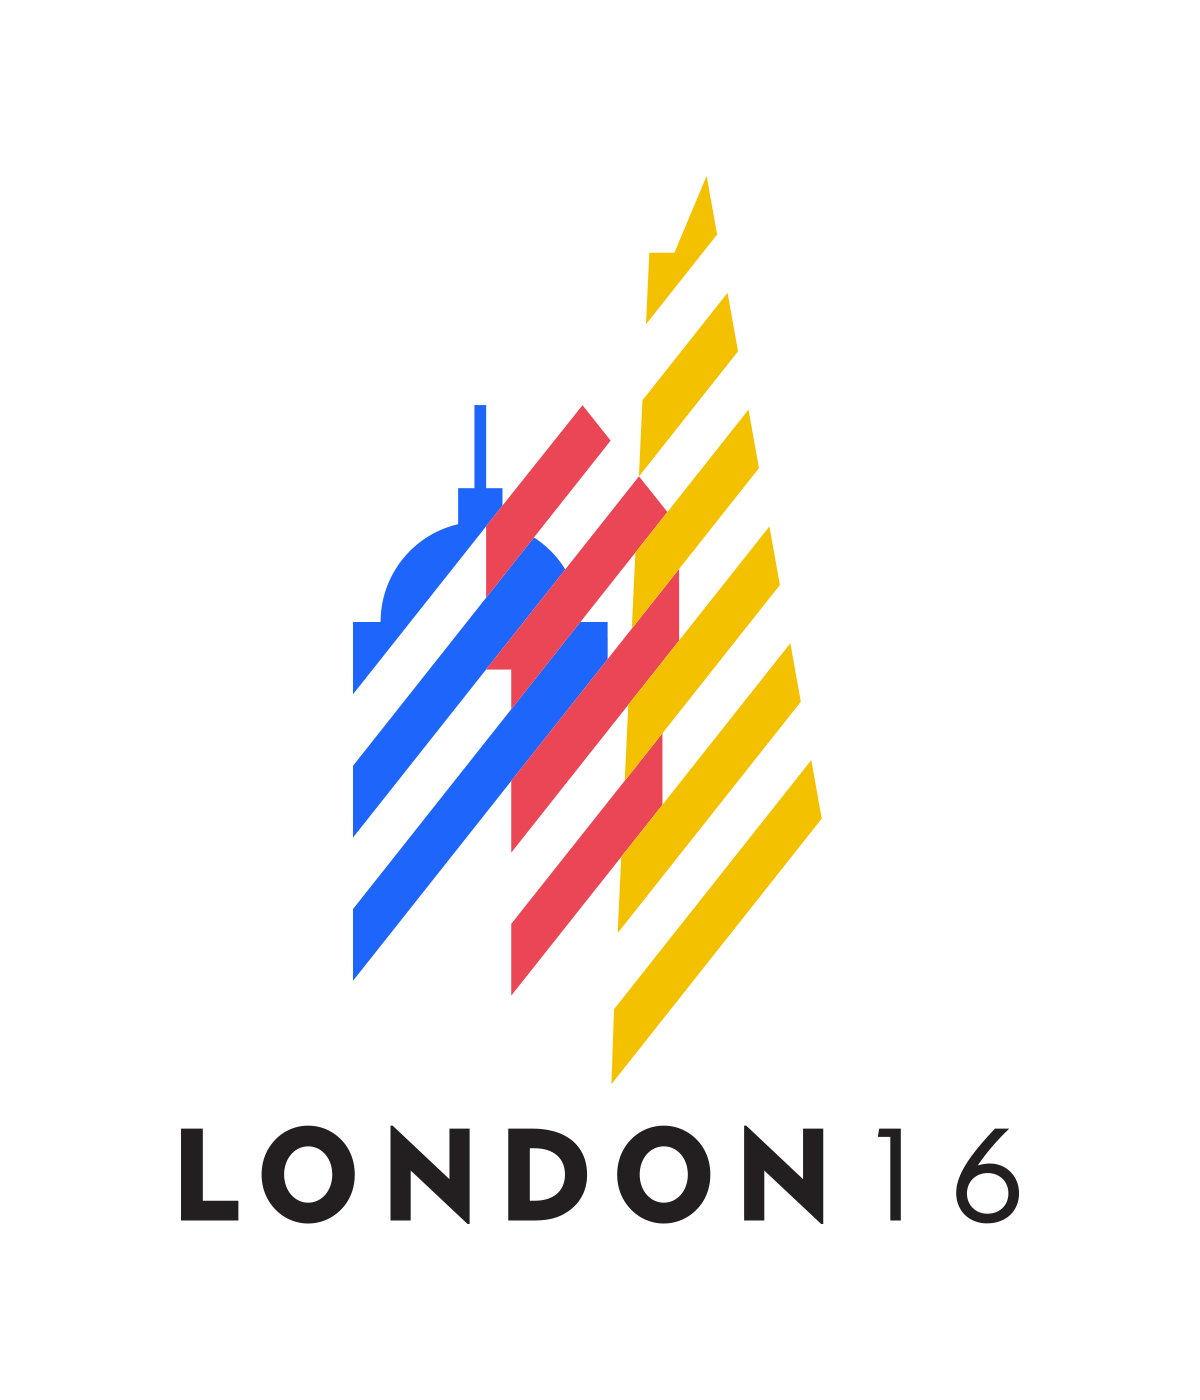 London Logo - EBRD London 2016 logo